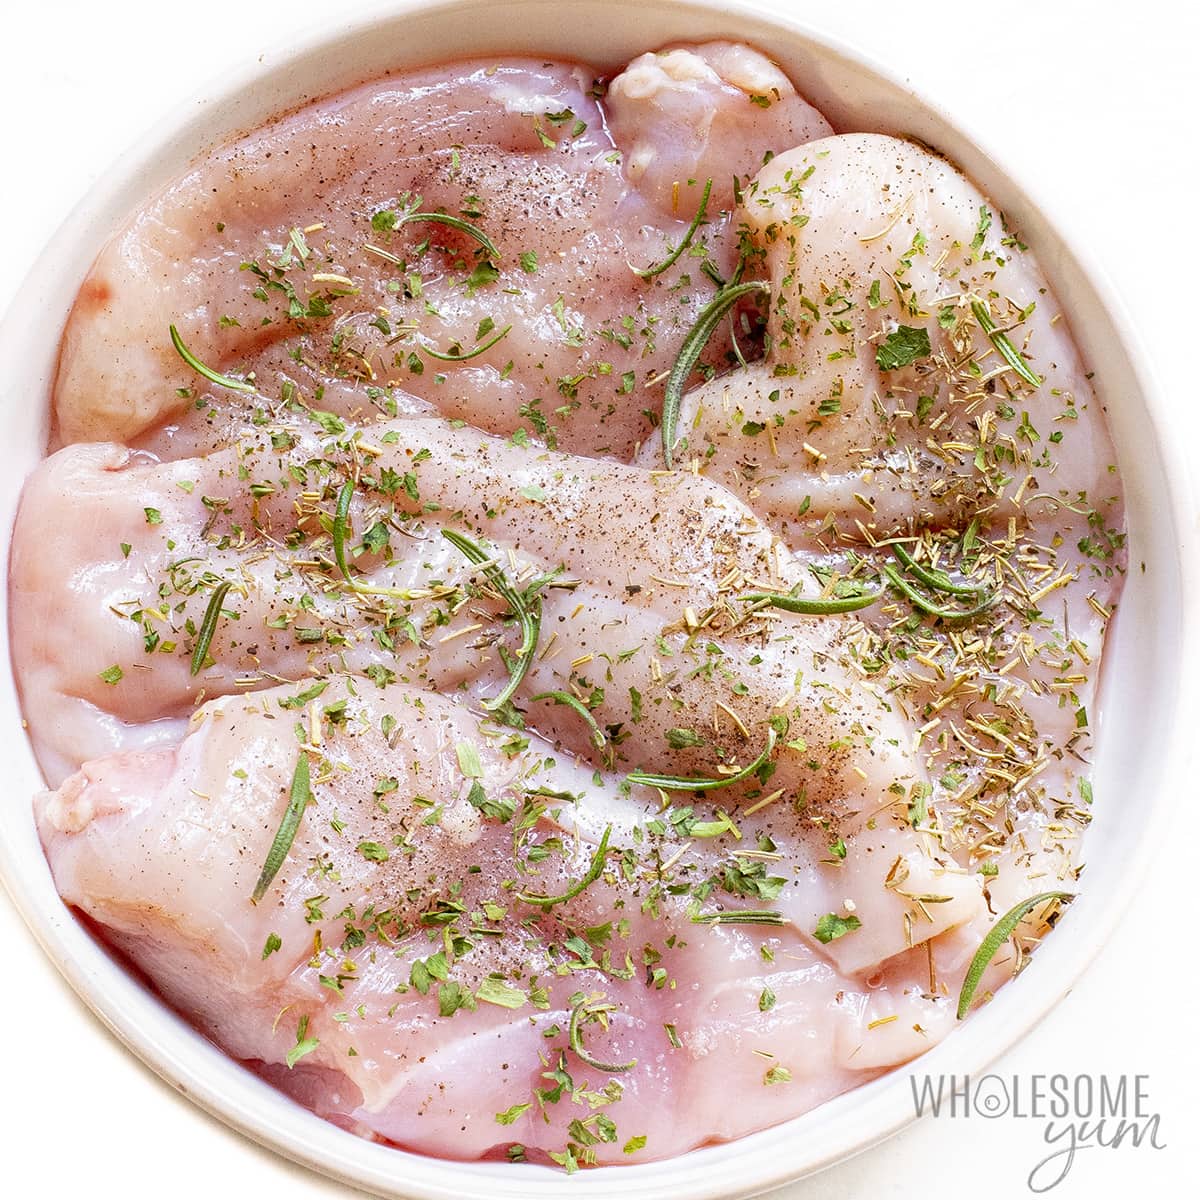 Raw seasoned chicken breasts in a bowl.